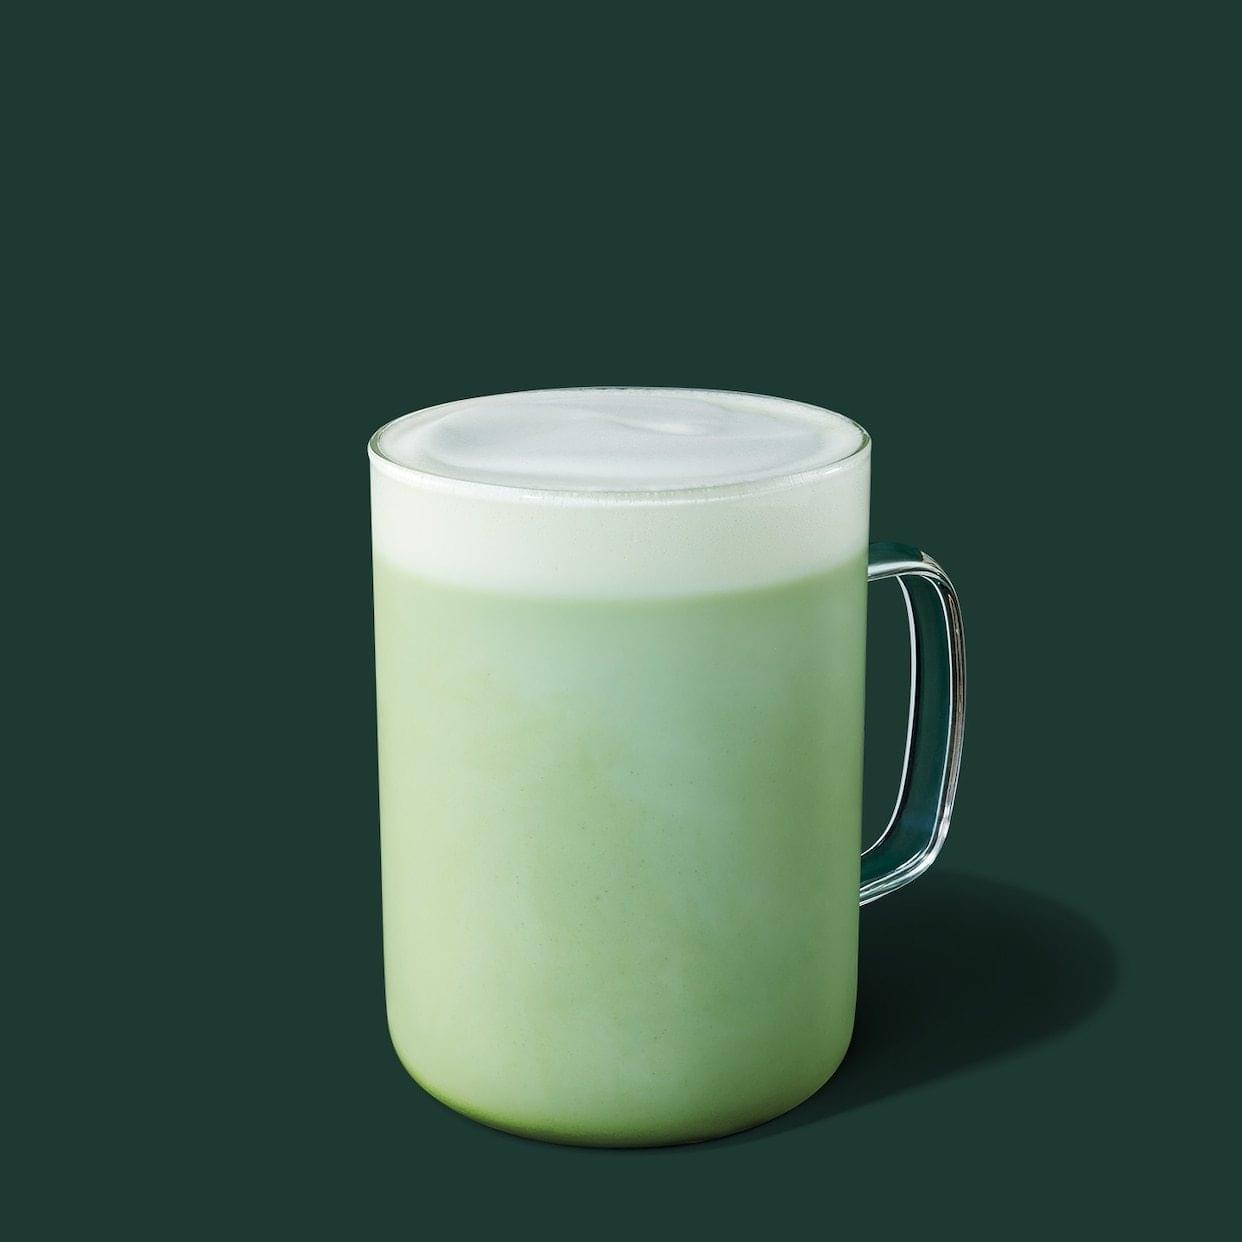 Starbucks Matcha Green Tea Latte Nutrition Facts